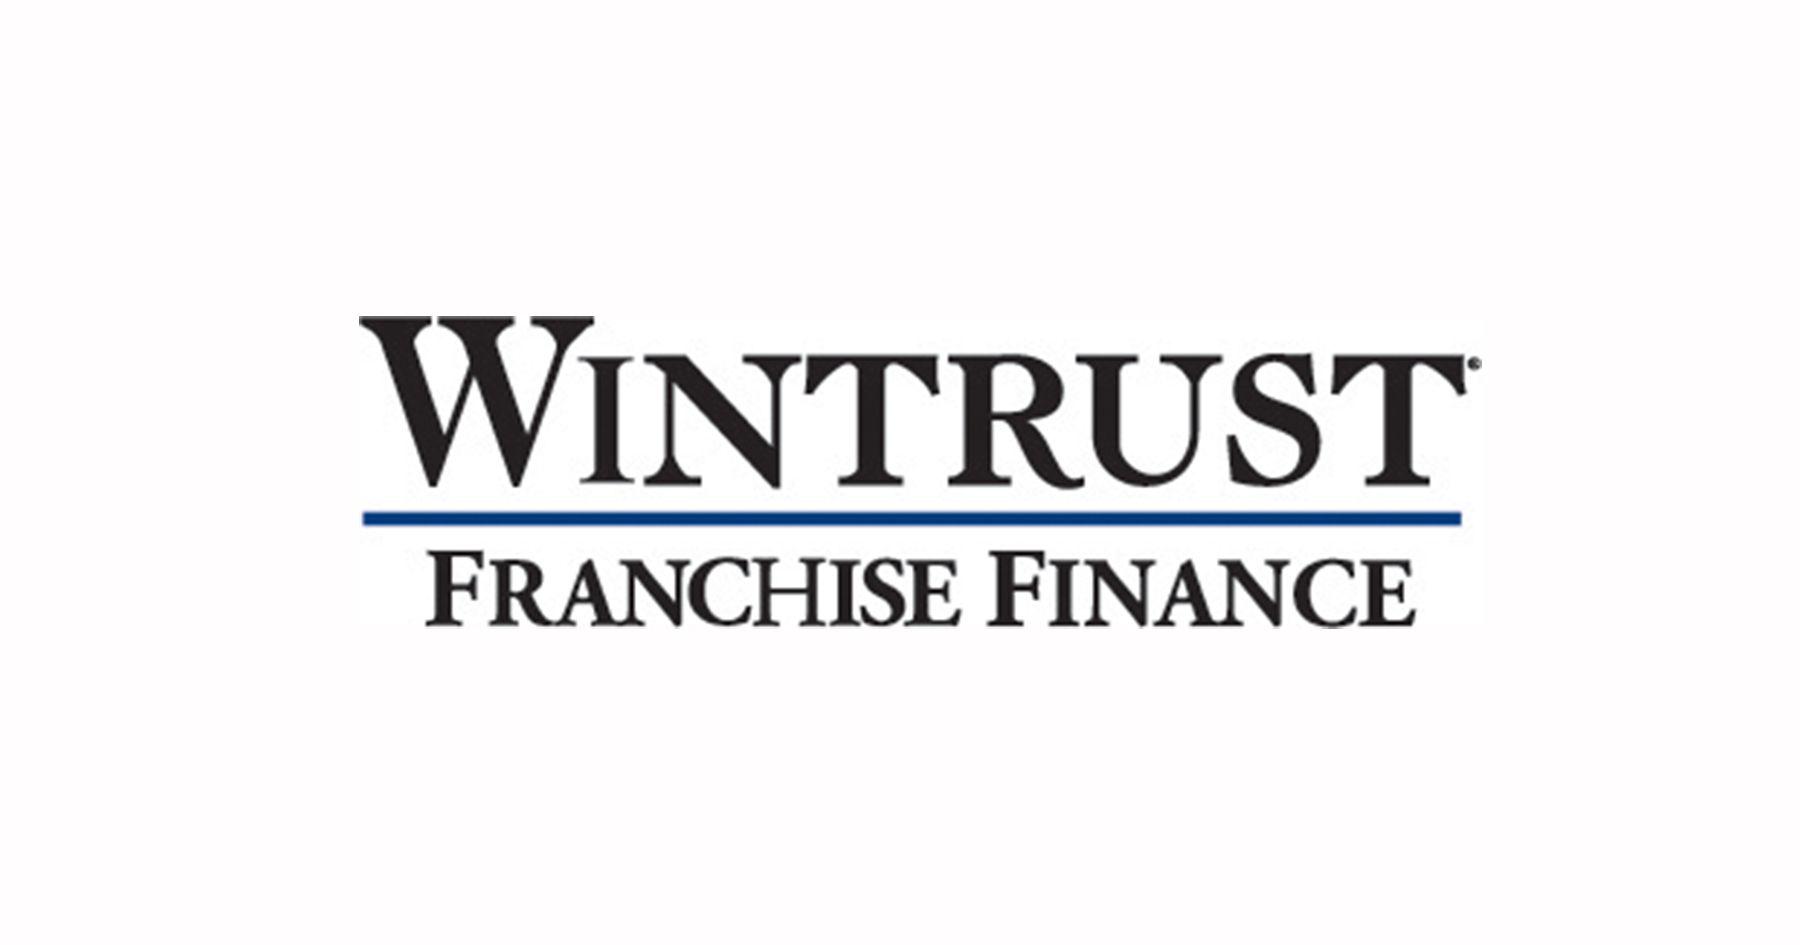 Wintrust Logo - Wintrust Franchise Finance - Restaurant Leadership Conference